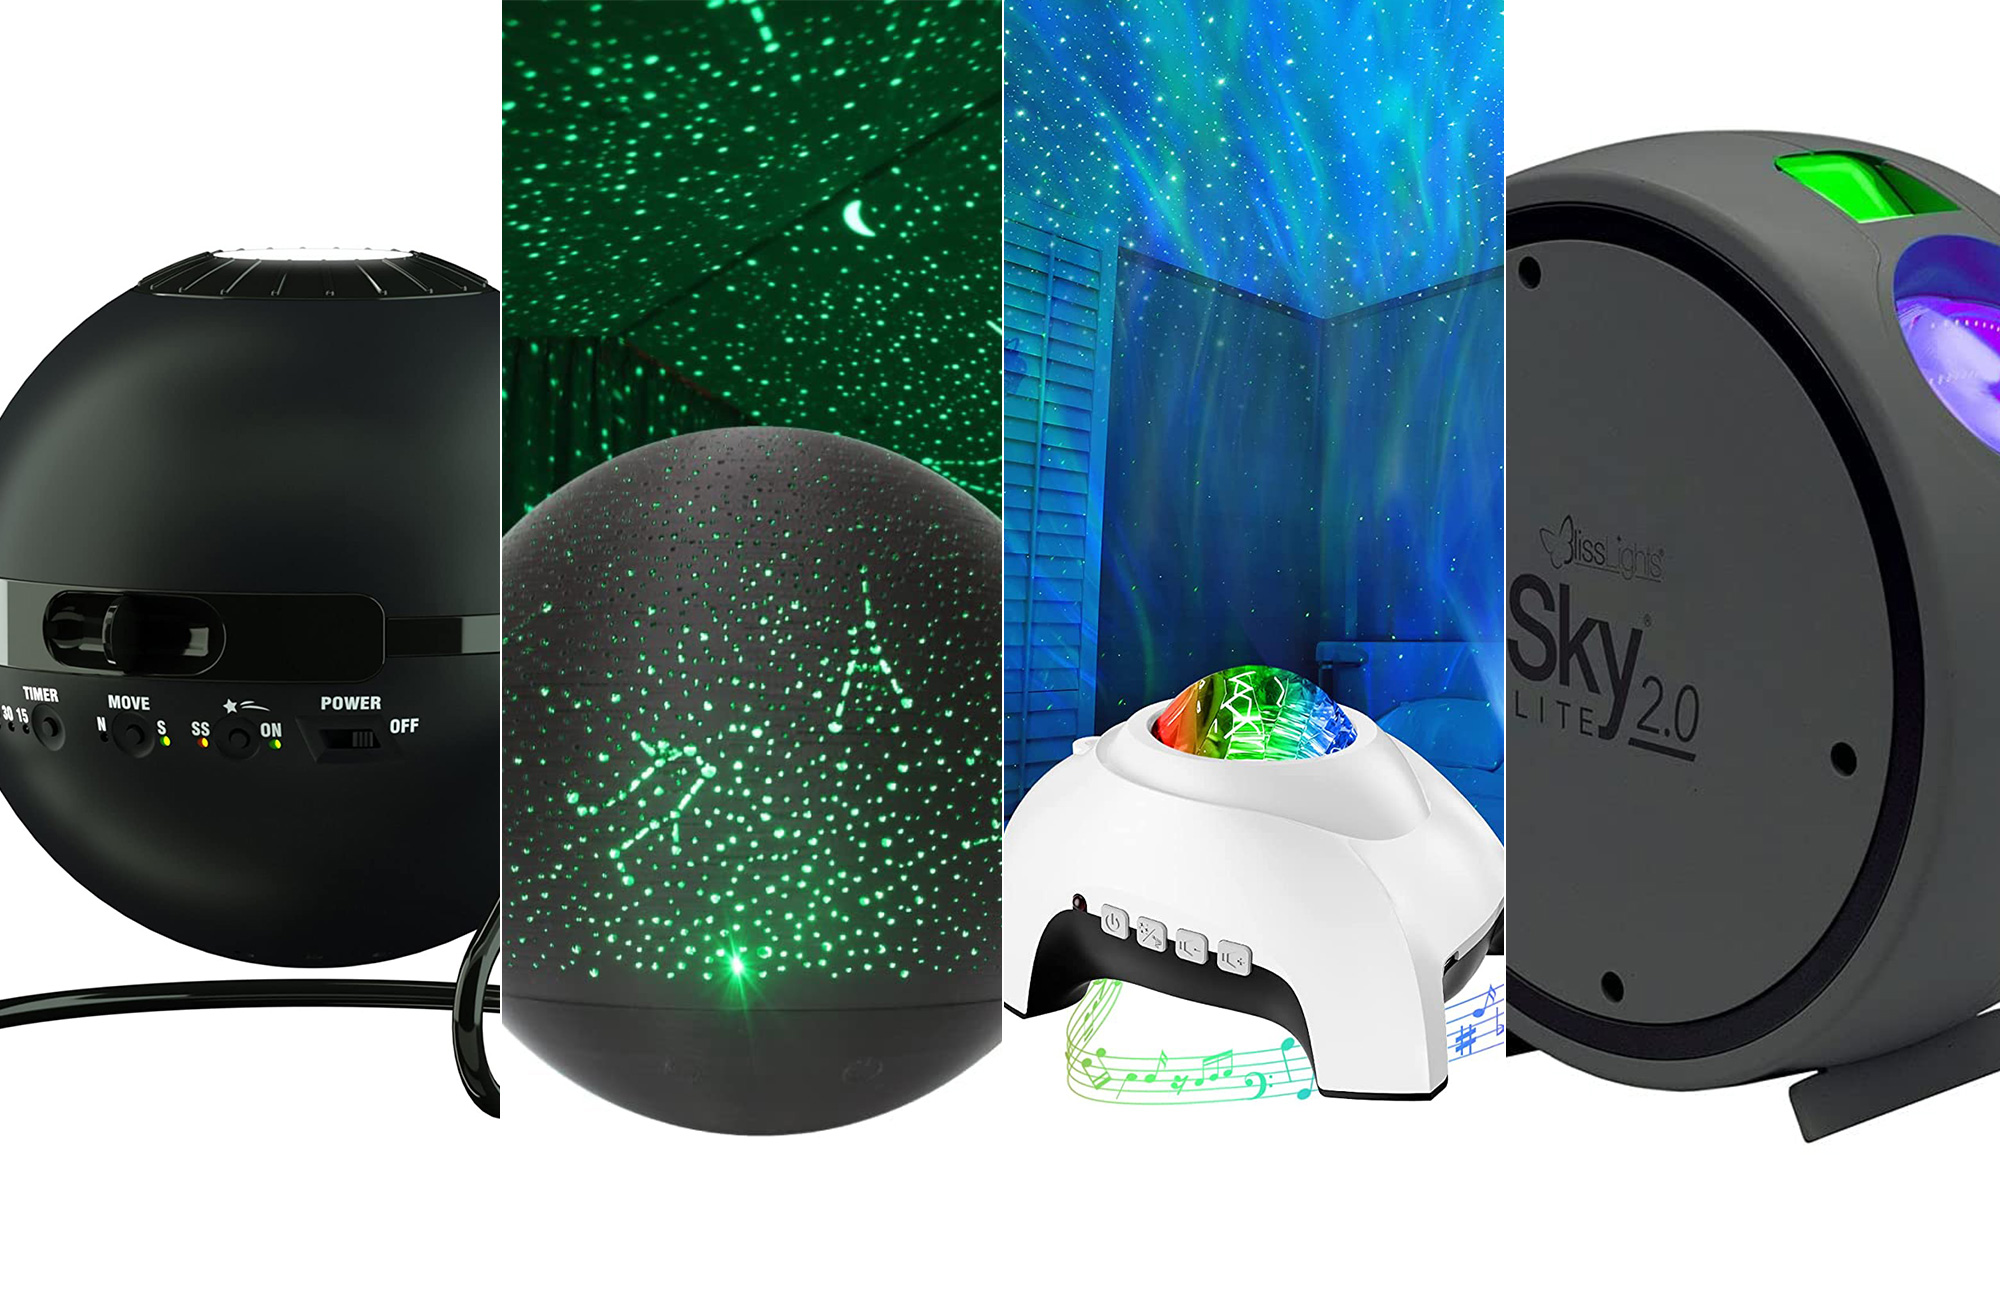 Projecteur Galaxie  Projector, Starry night light, Music speakers